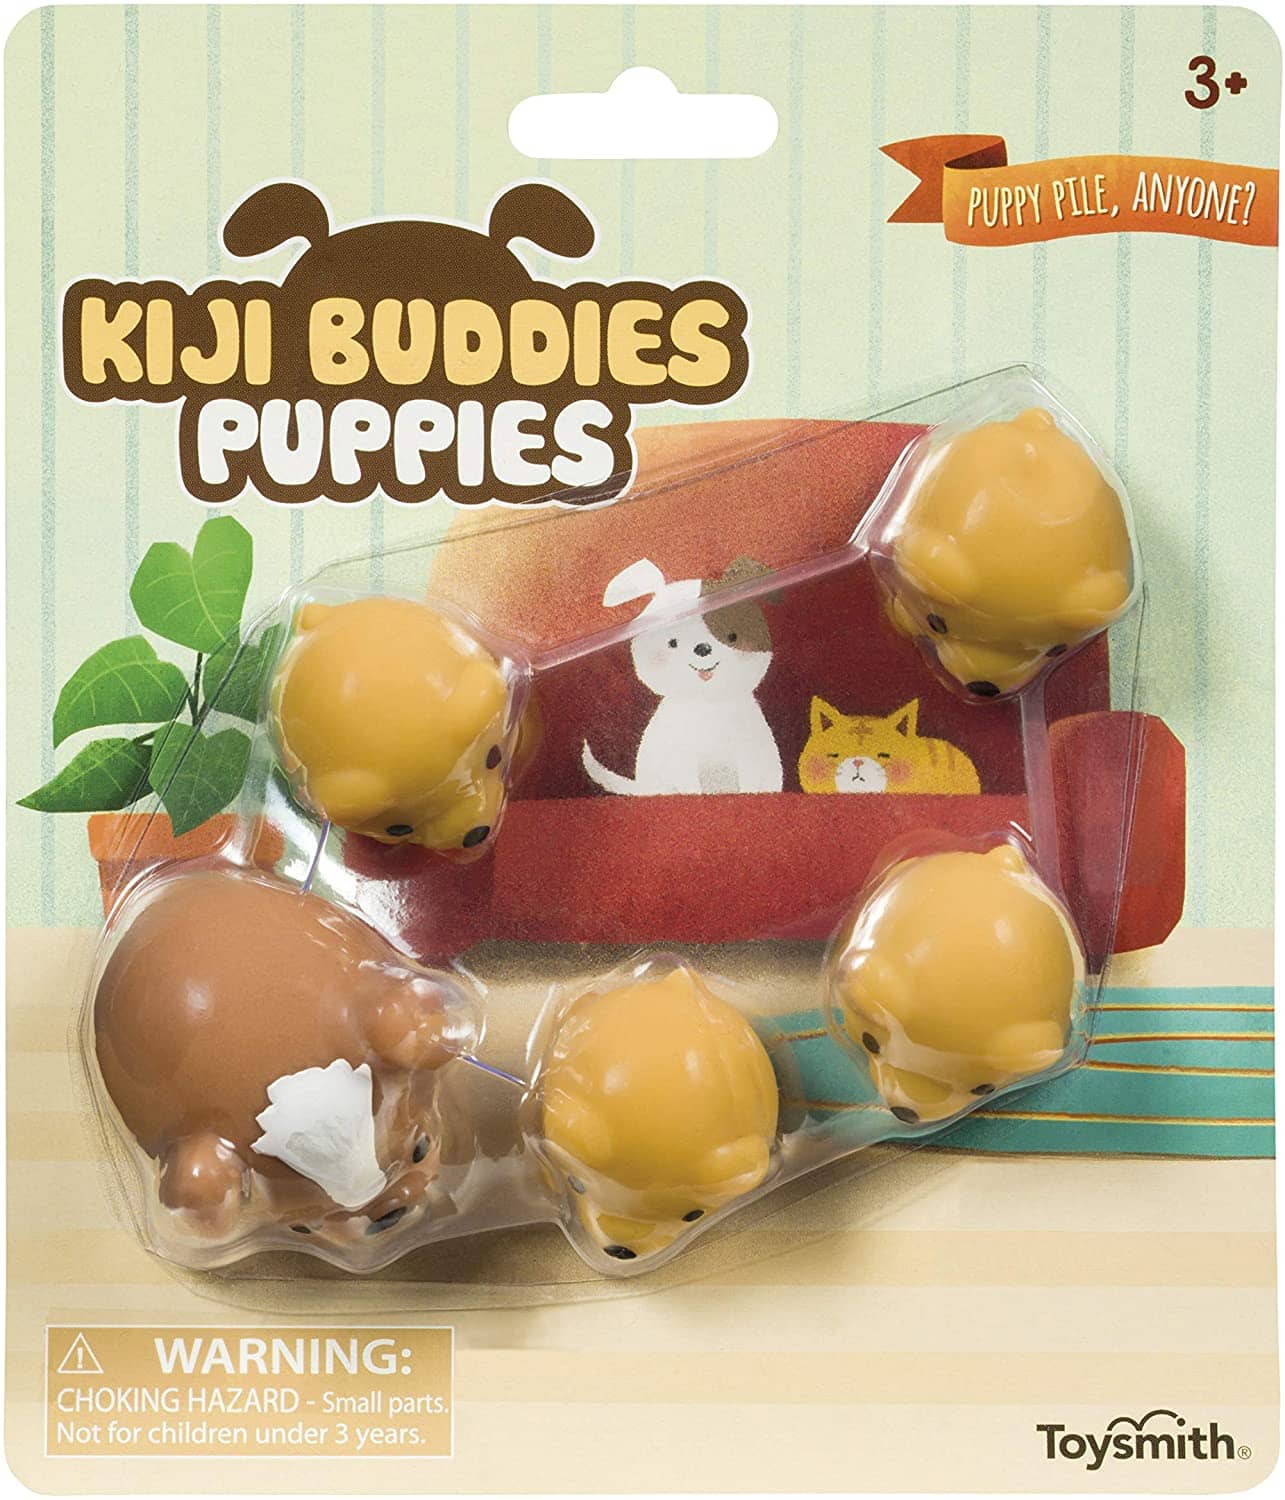 Puppies Kiji Buddies-Kidding Around NYC